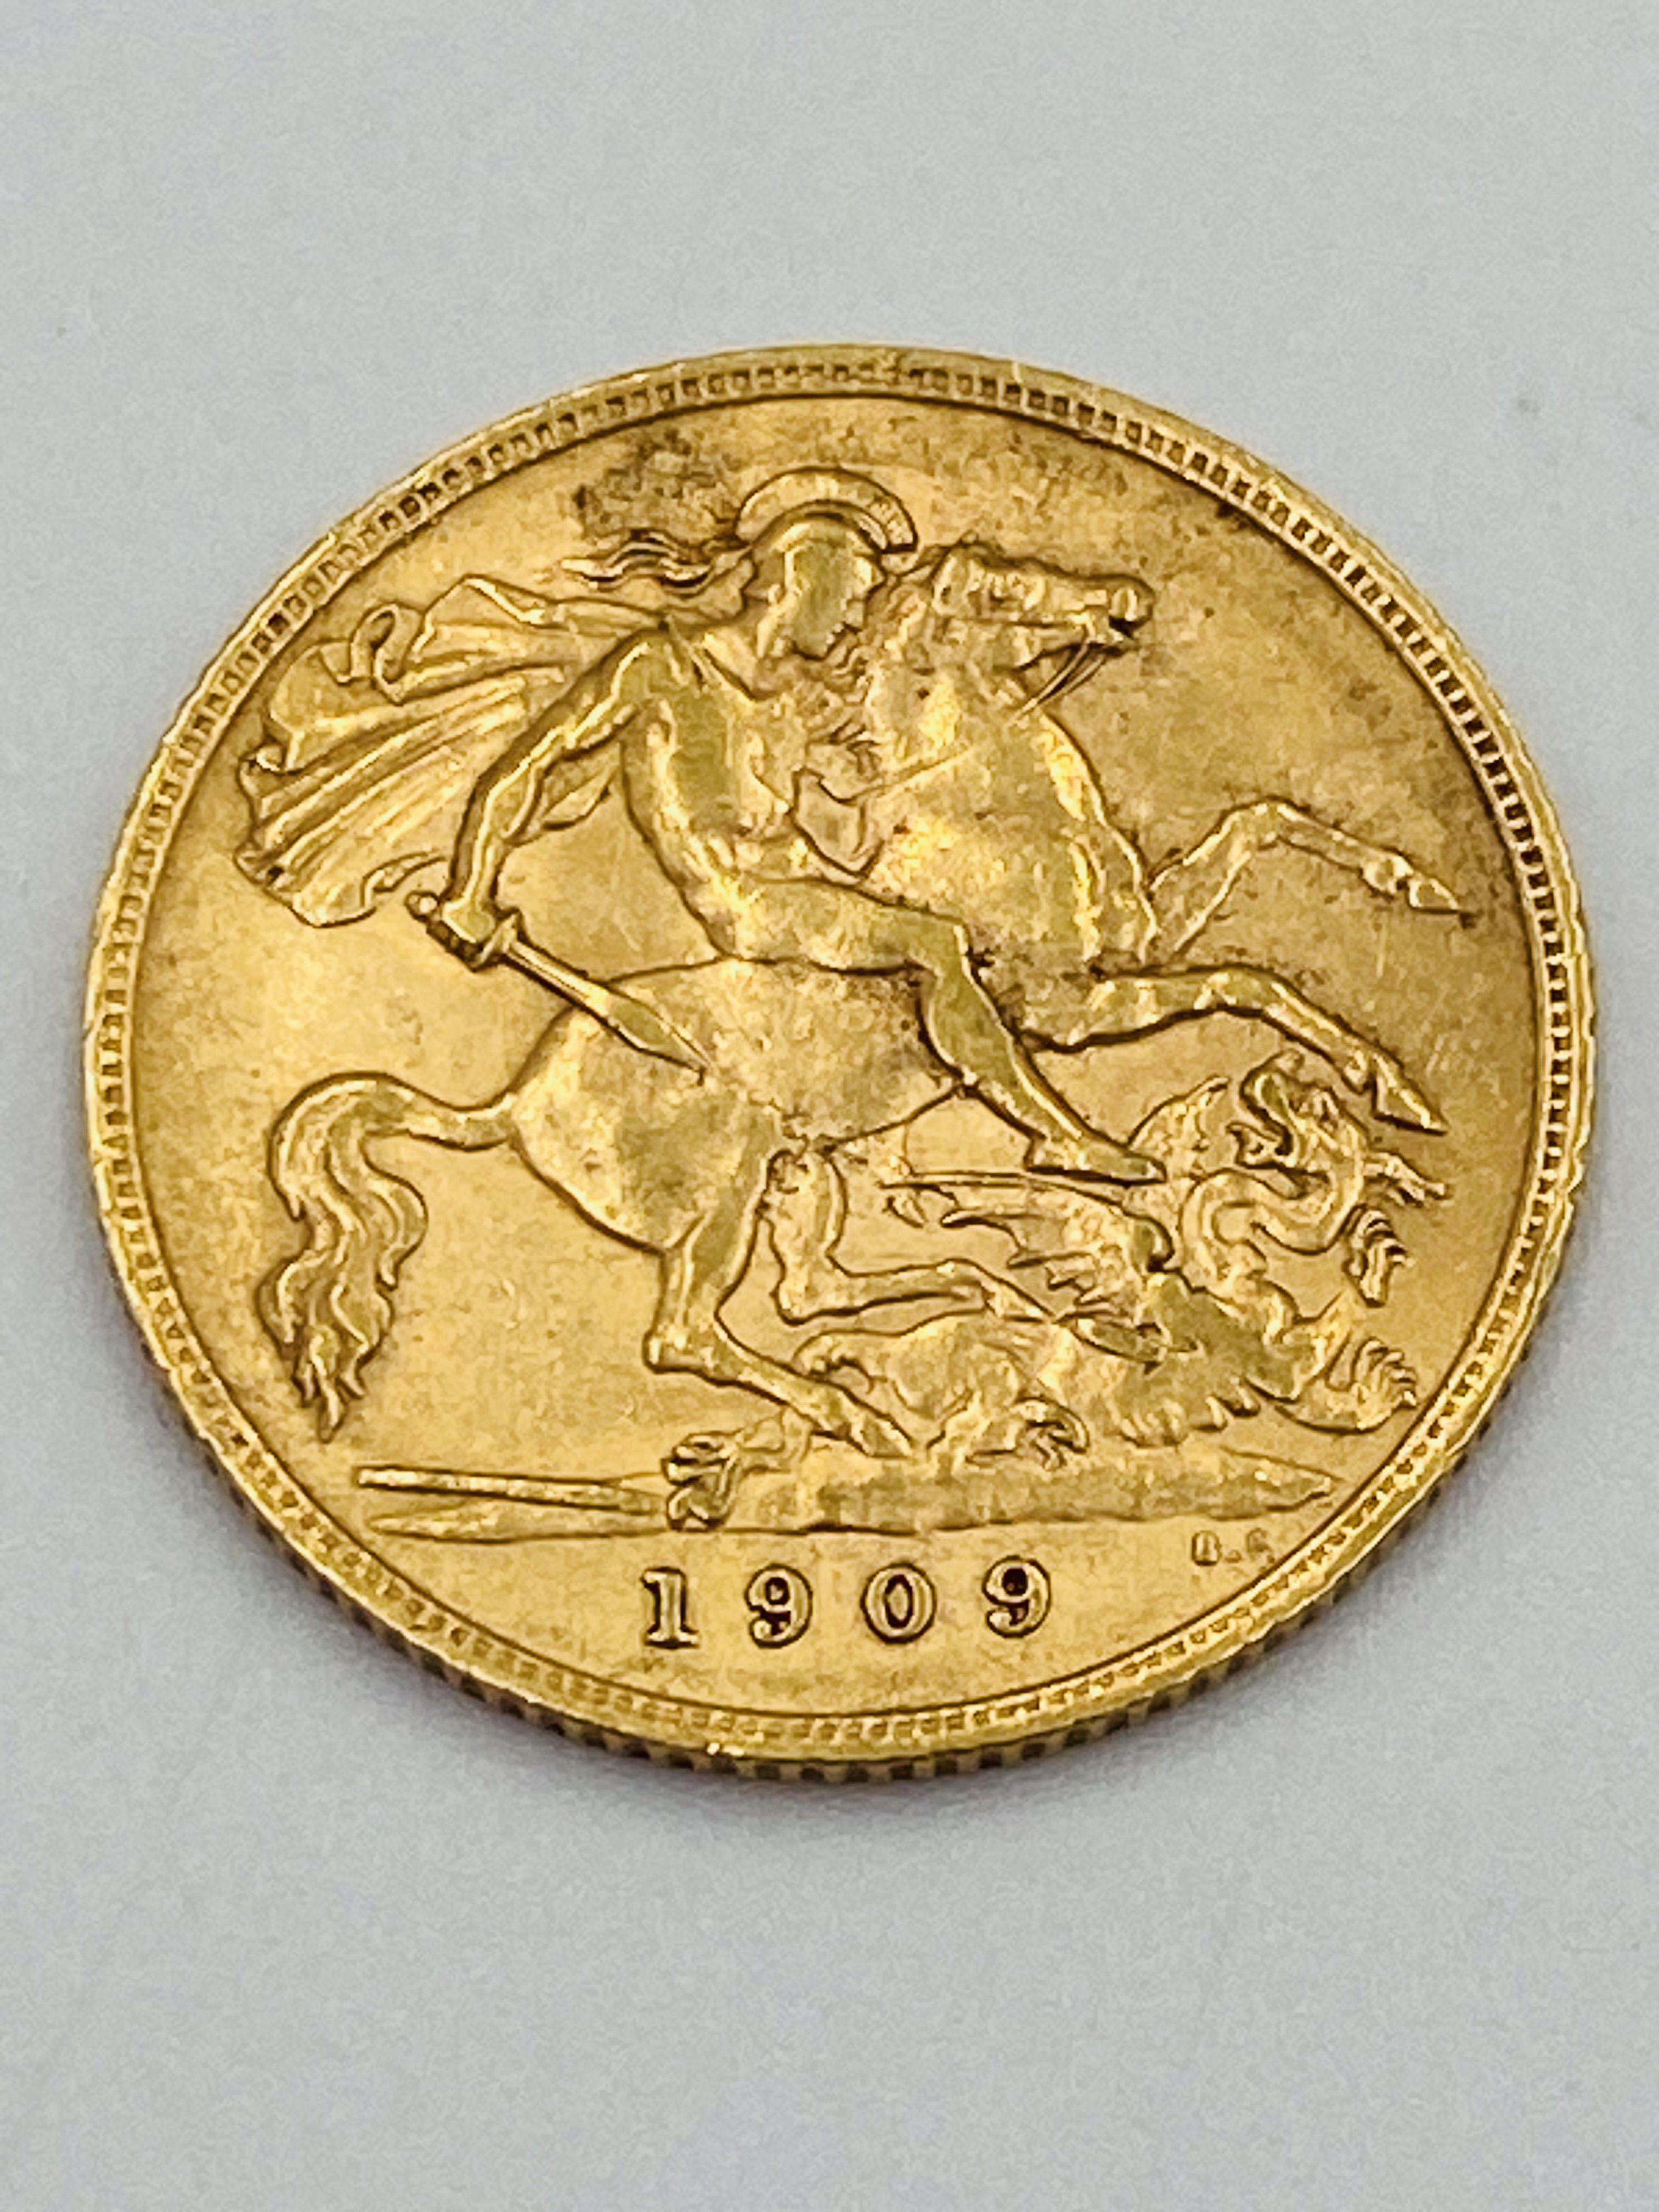 Edward VII gold half sovereign